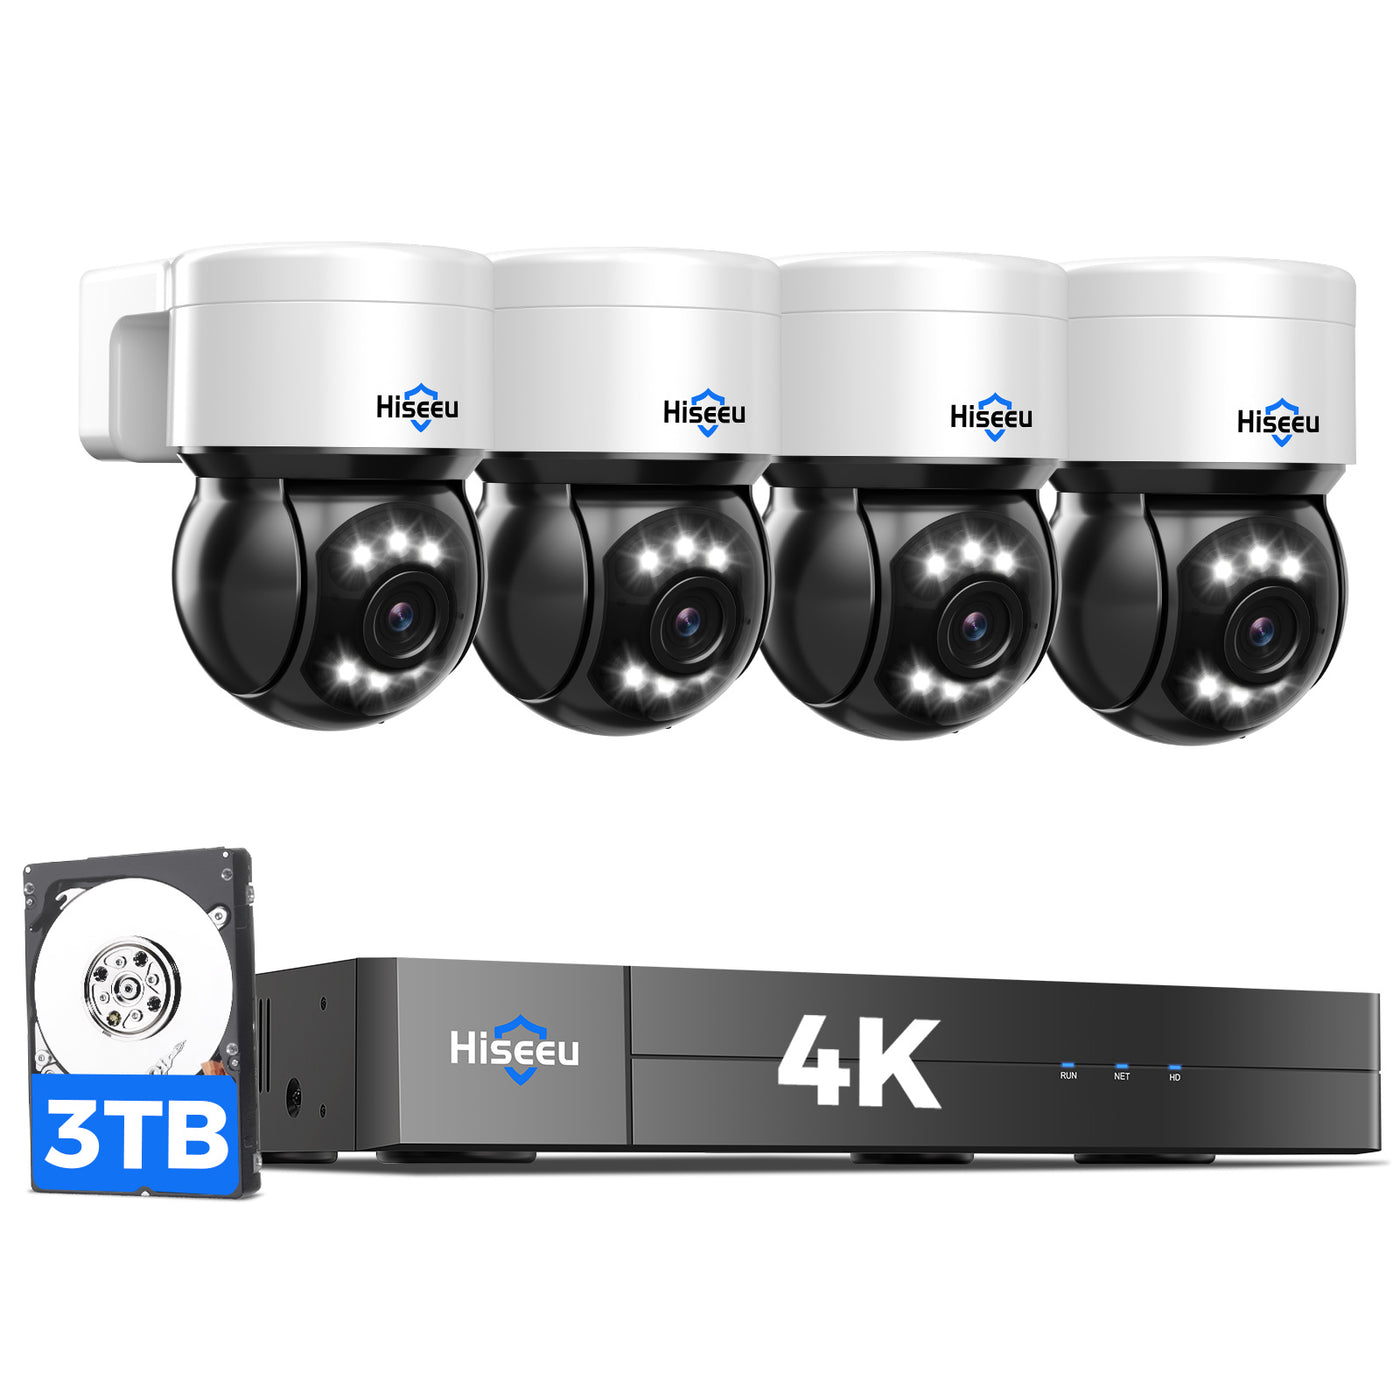 Hiseeu [4K HD + 330°Pan 90°Tilt] 4K PoE Security Camera System, CCTV Camera Security System w/4Pcs PoE PTZ Dome Cameras, Human/Vehicle Detect,2-Way Audio,Home Surveillance NVR Kit, 3TB HDD,7/24 Record